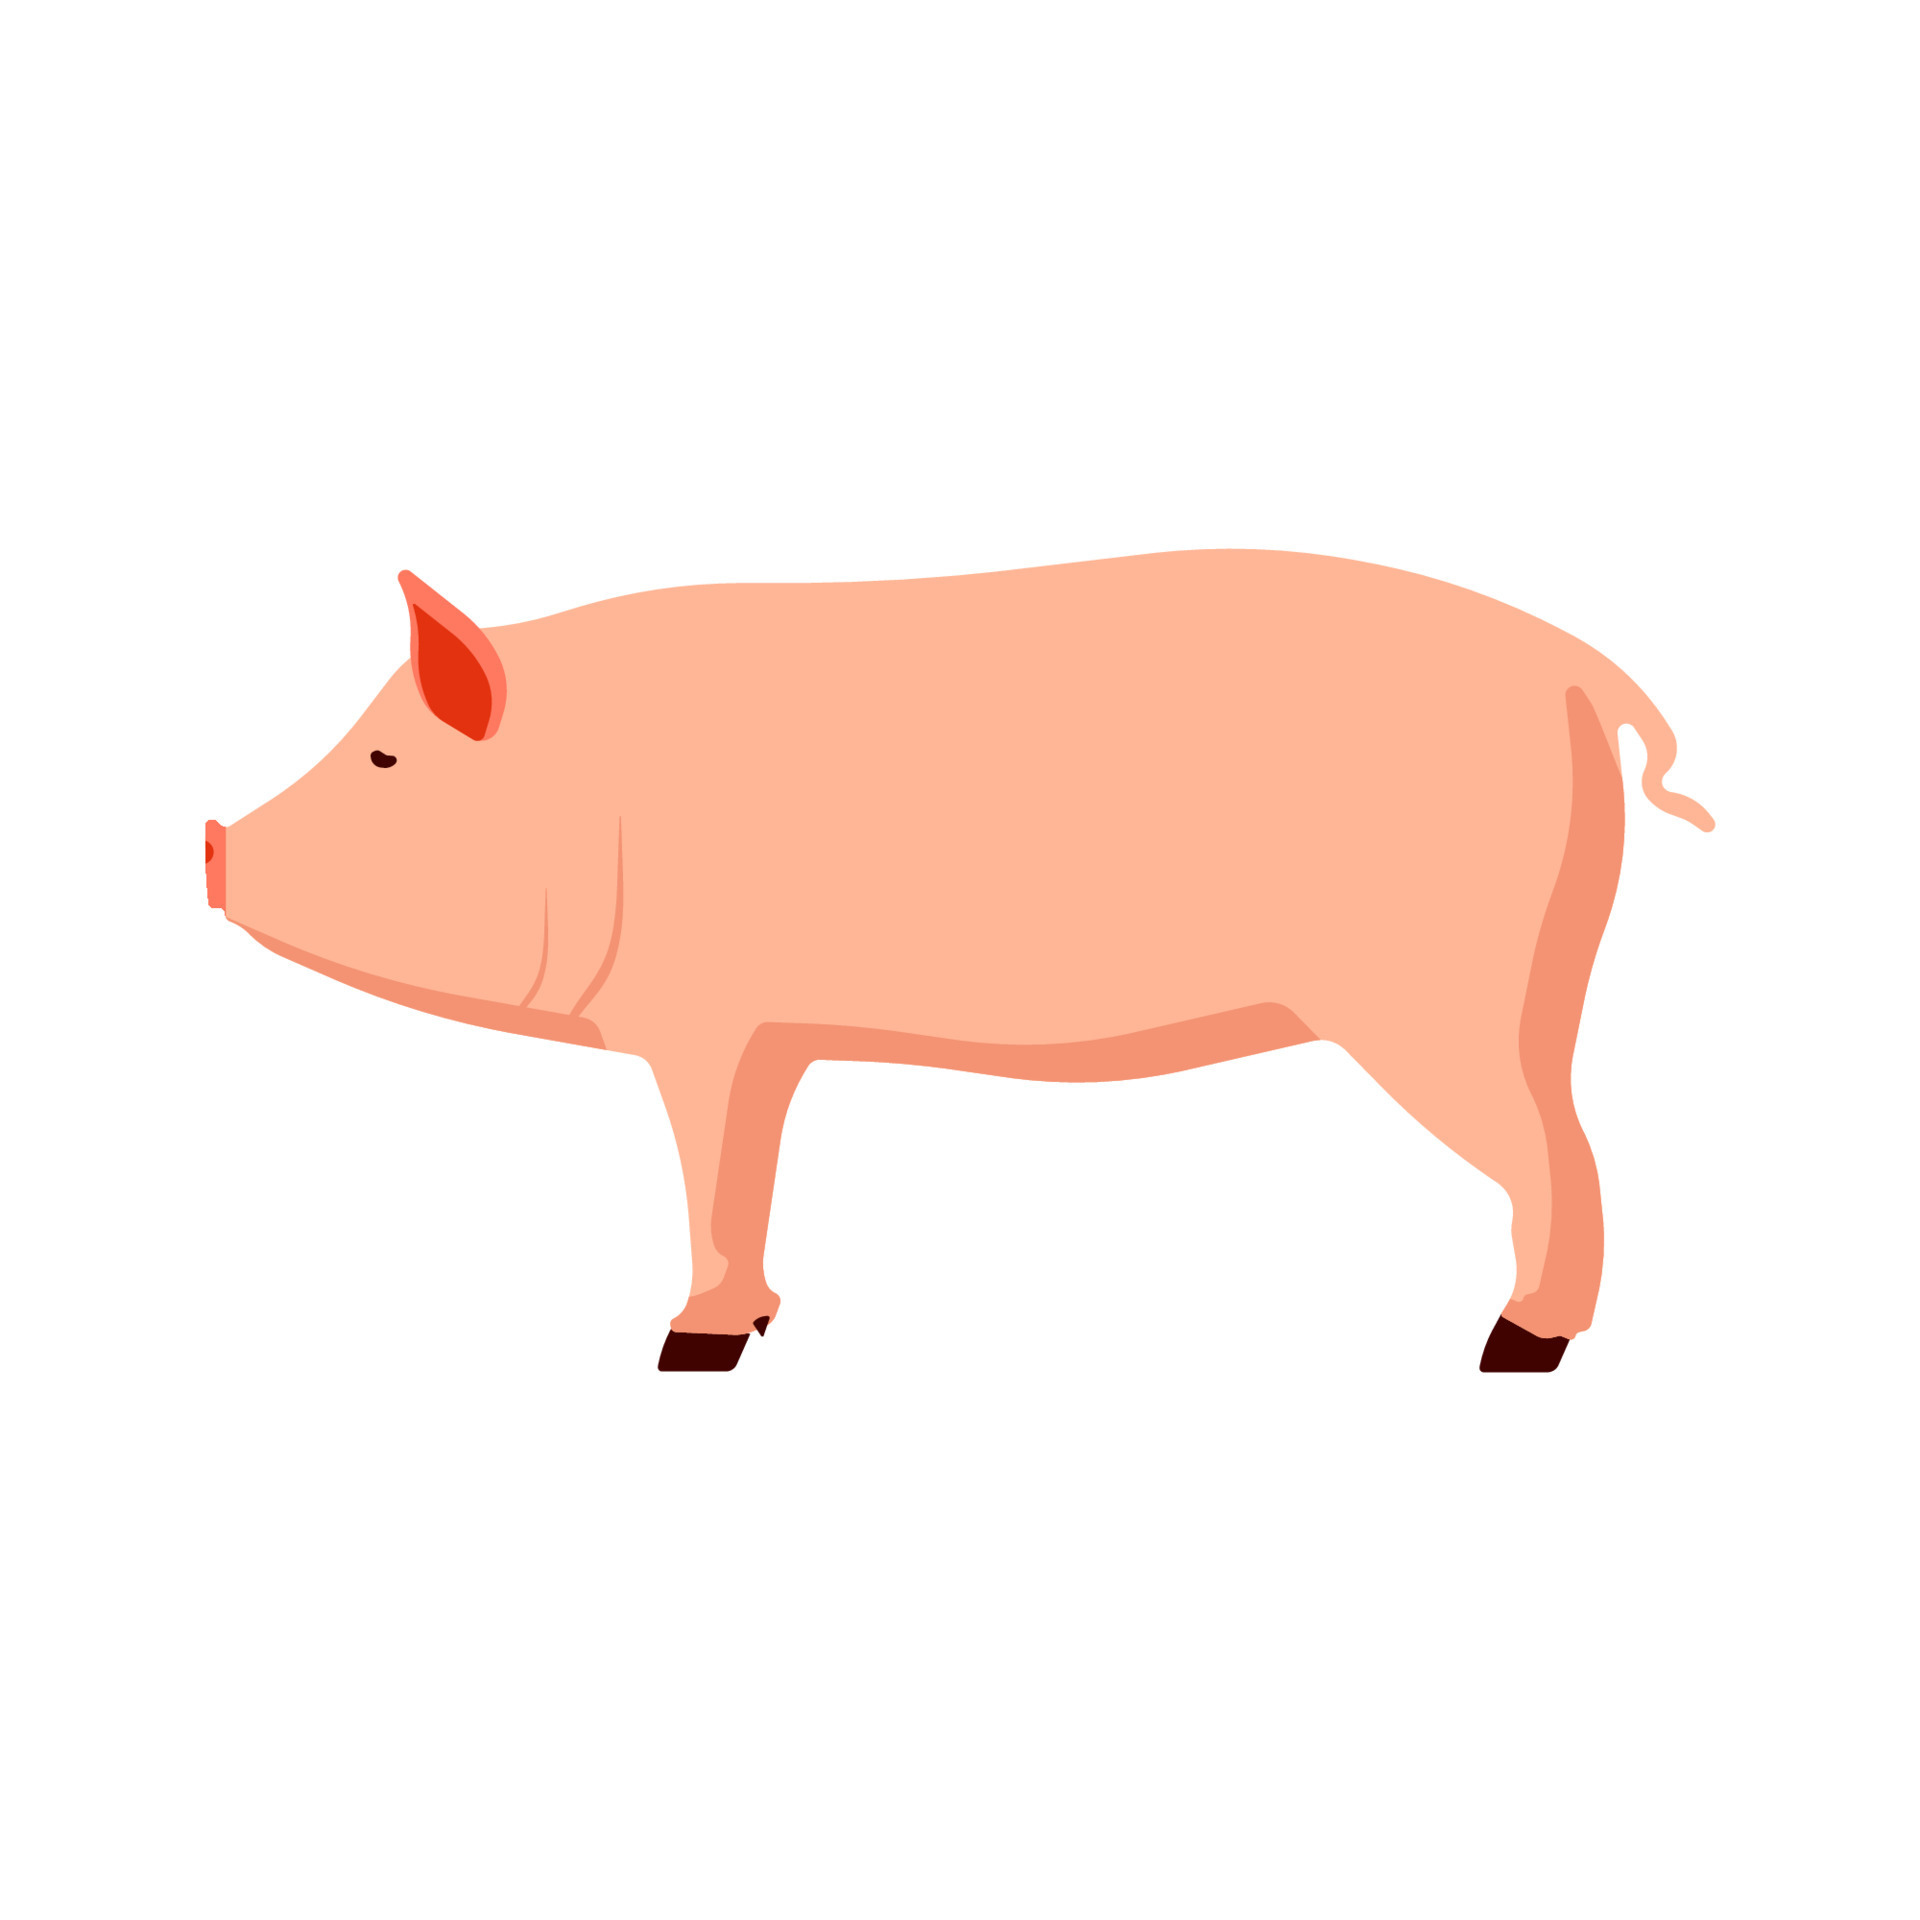 Animal pink pig vector illustration side view cartoon design. Cute art farm  piglet graphic sign. Piggy hog domestic mammal element. Mascot silhouette  swine drawing pet meat bacon. Livestock concept 10881054 Vector Art